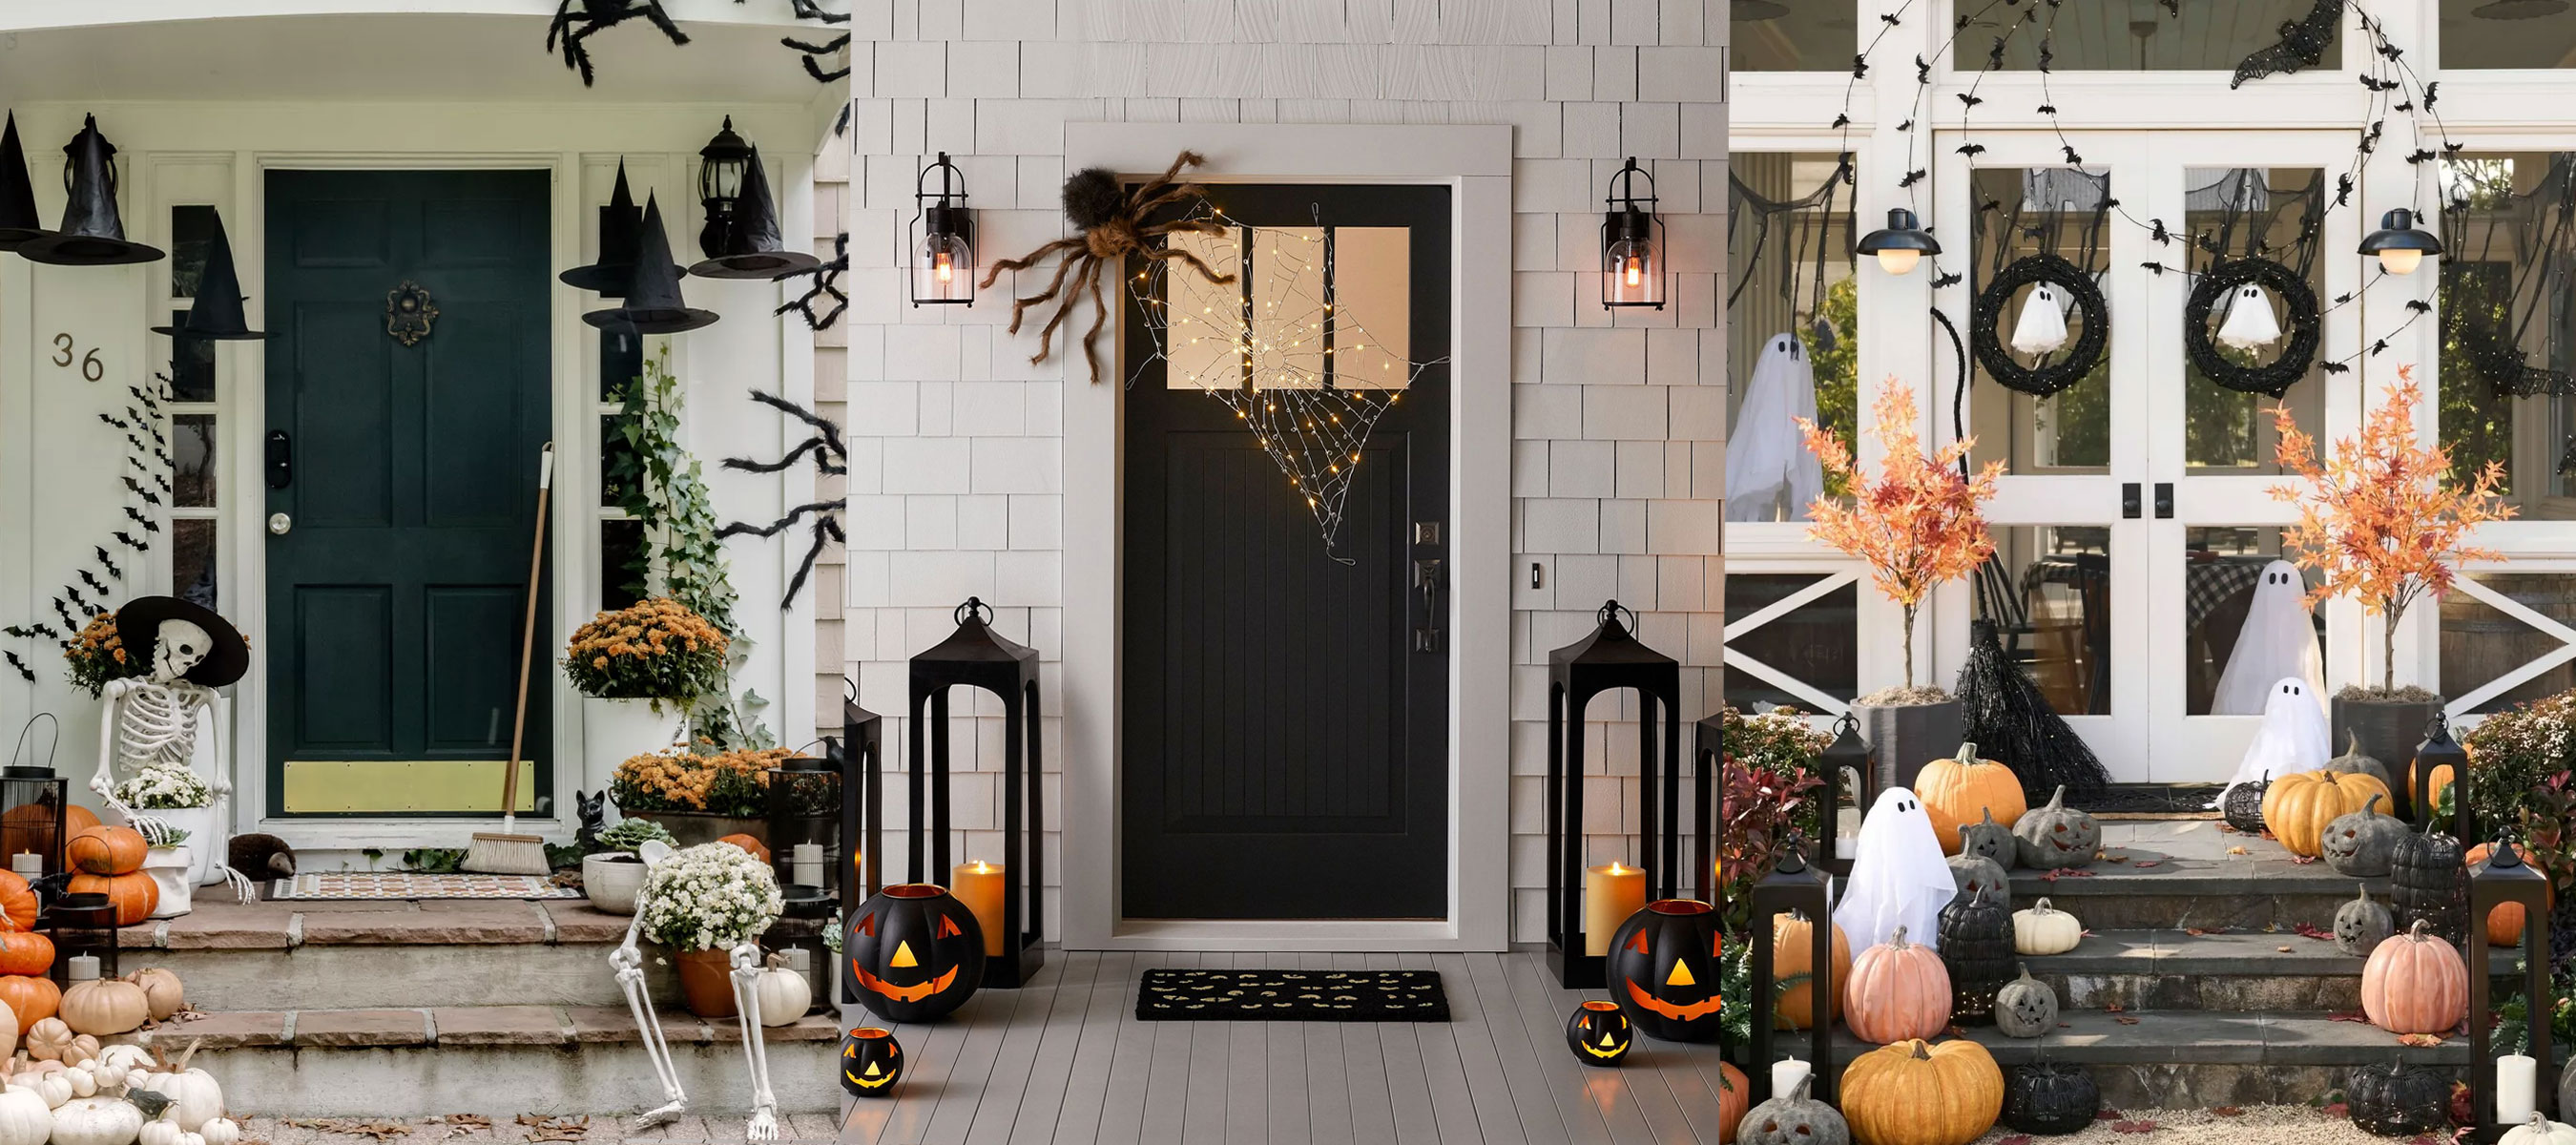 Best front porch Halloween decorations |